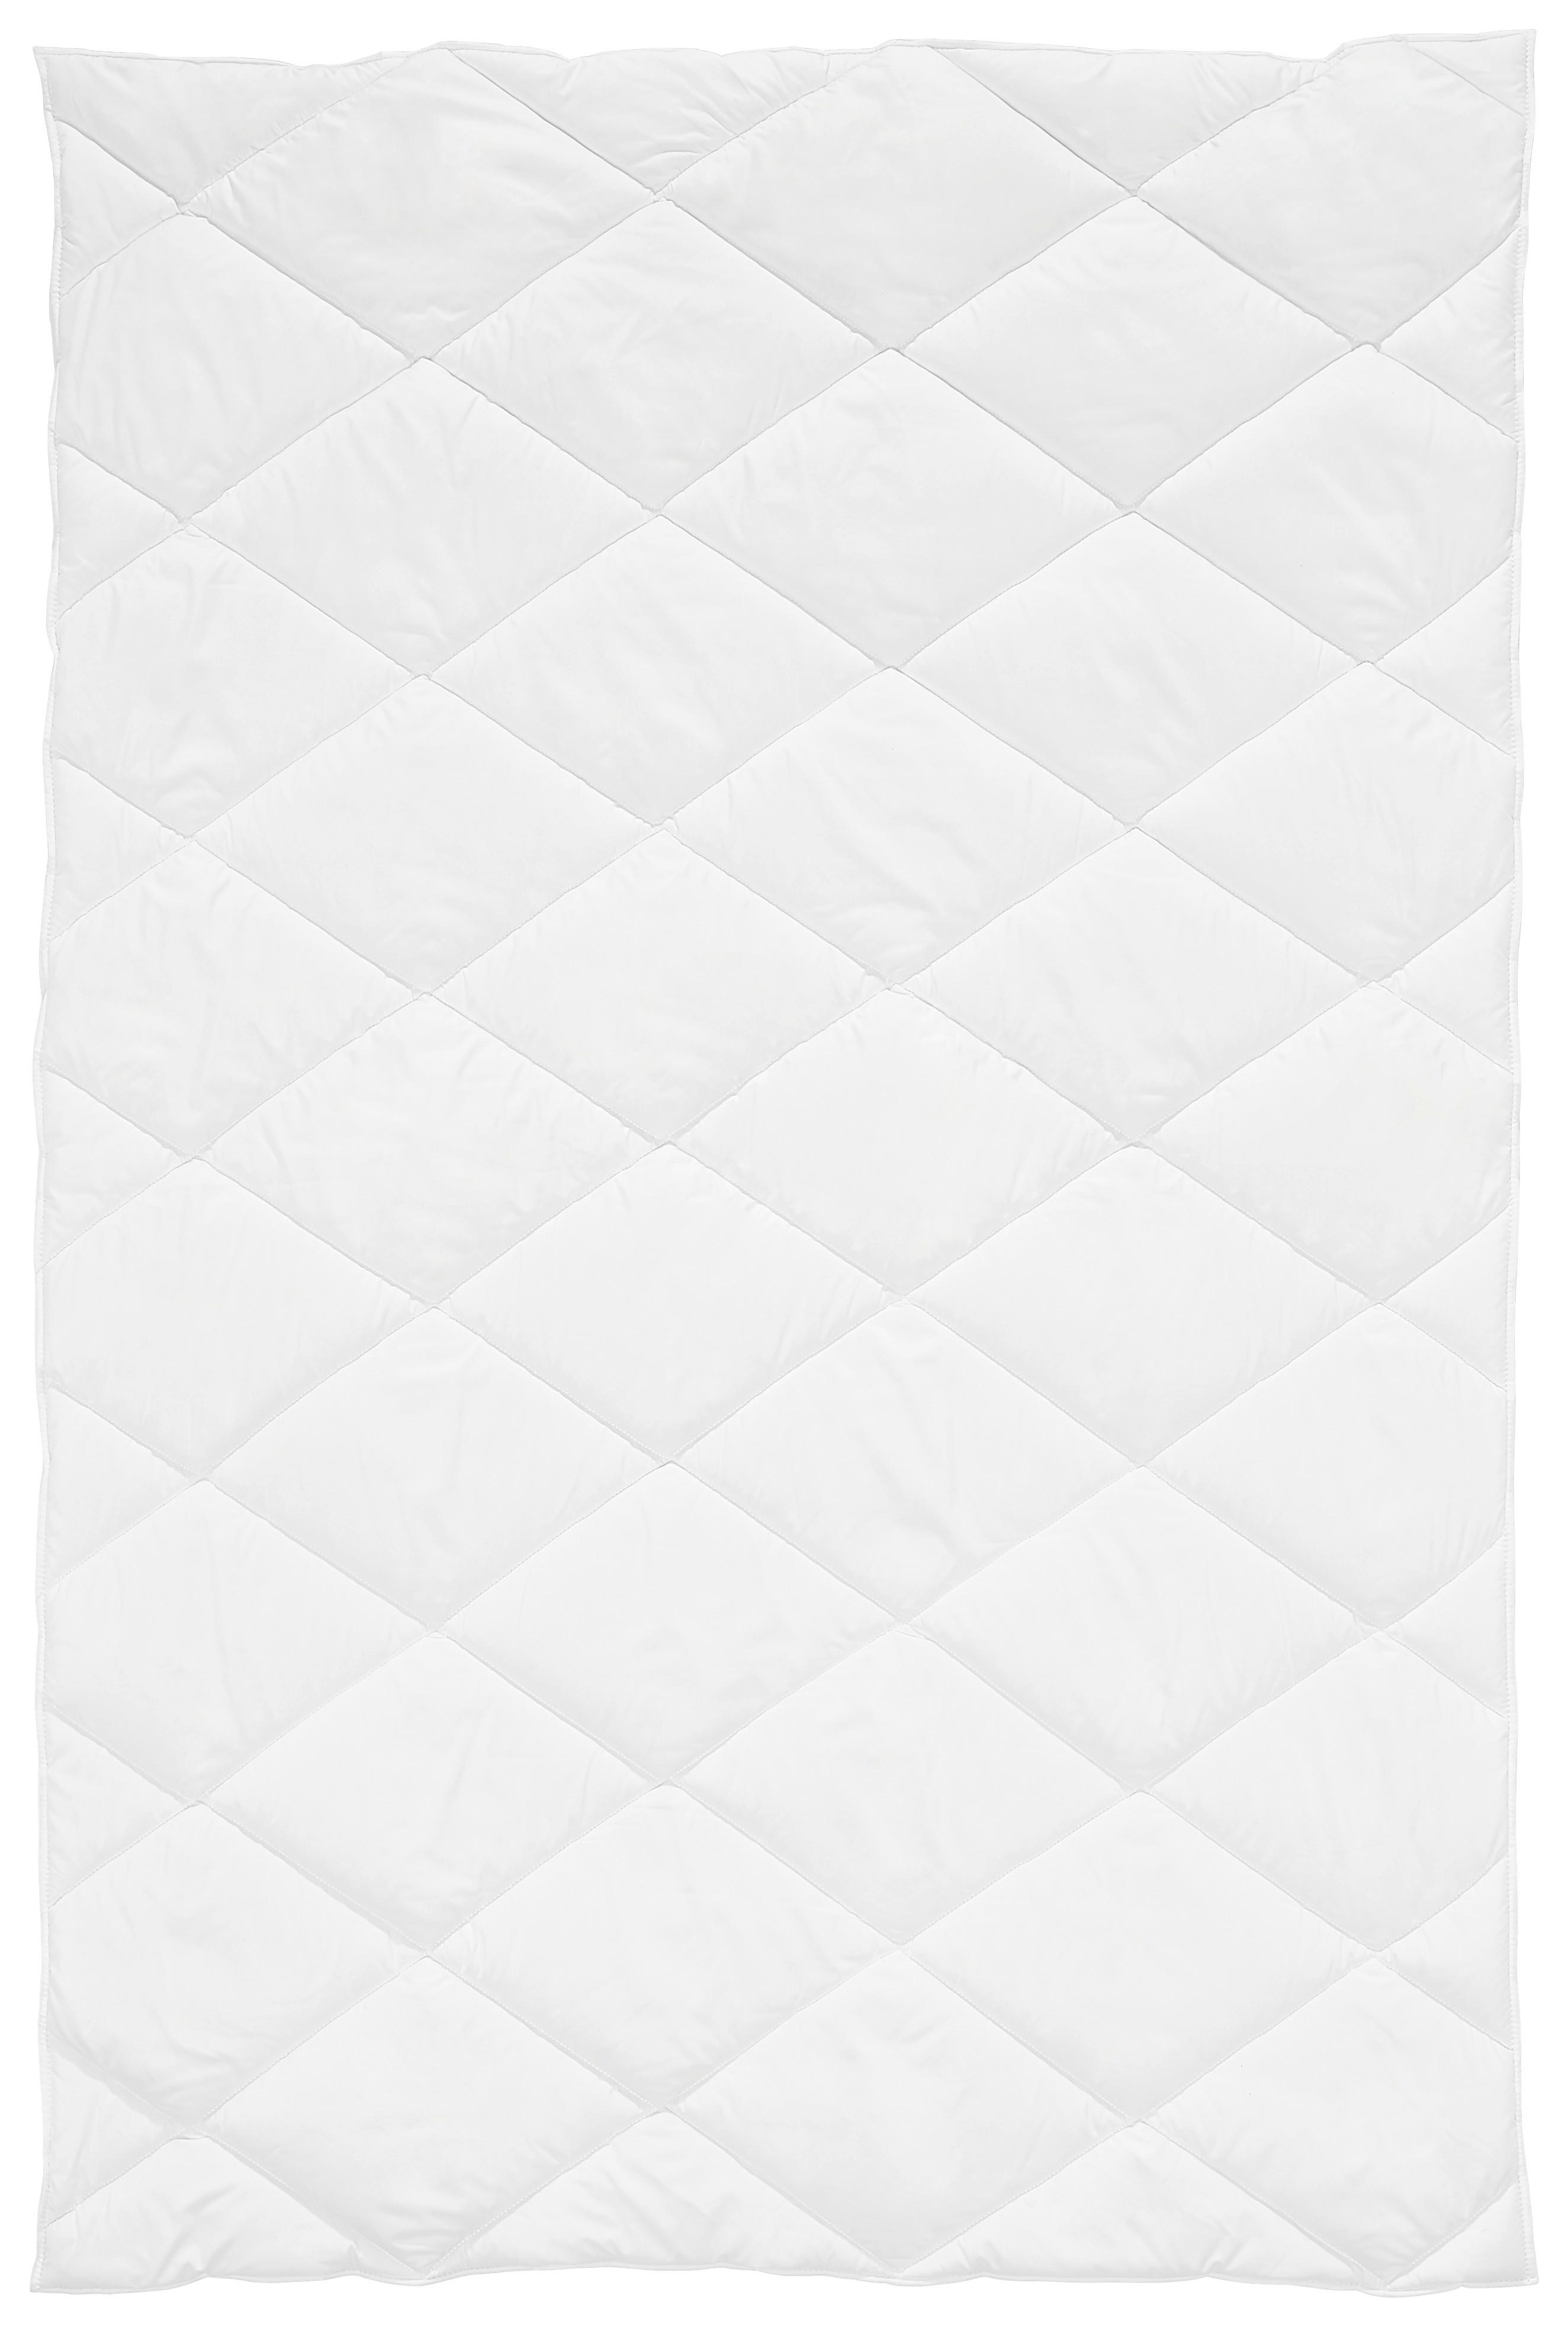 GANZJAHRESBETT  Oviedo  200/200 cm   - Weiß, Basics, Textil (200/200cm) - Sleeptex